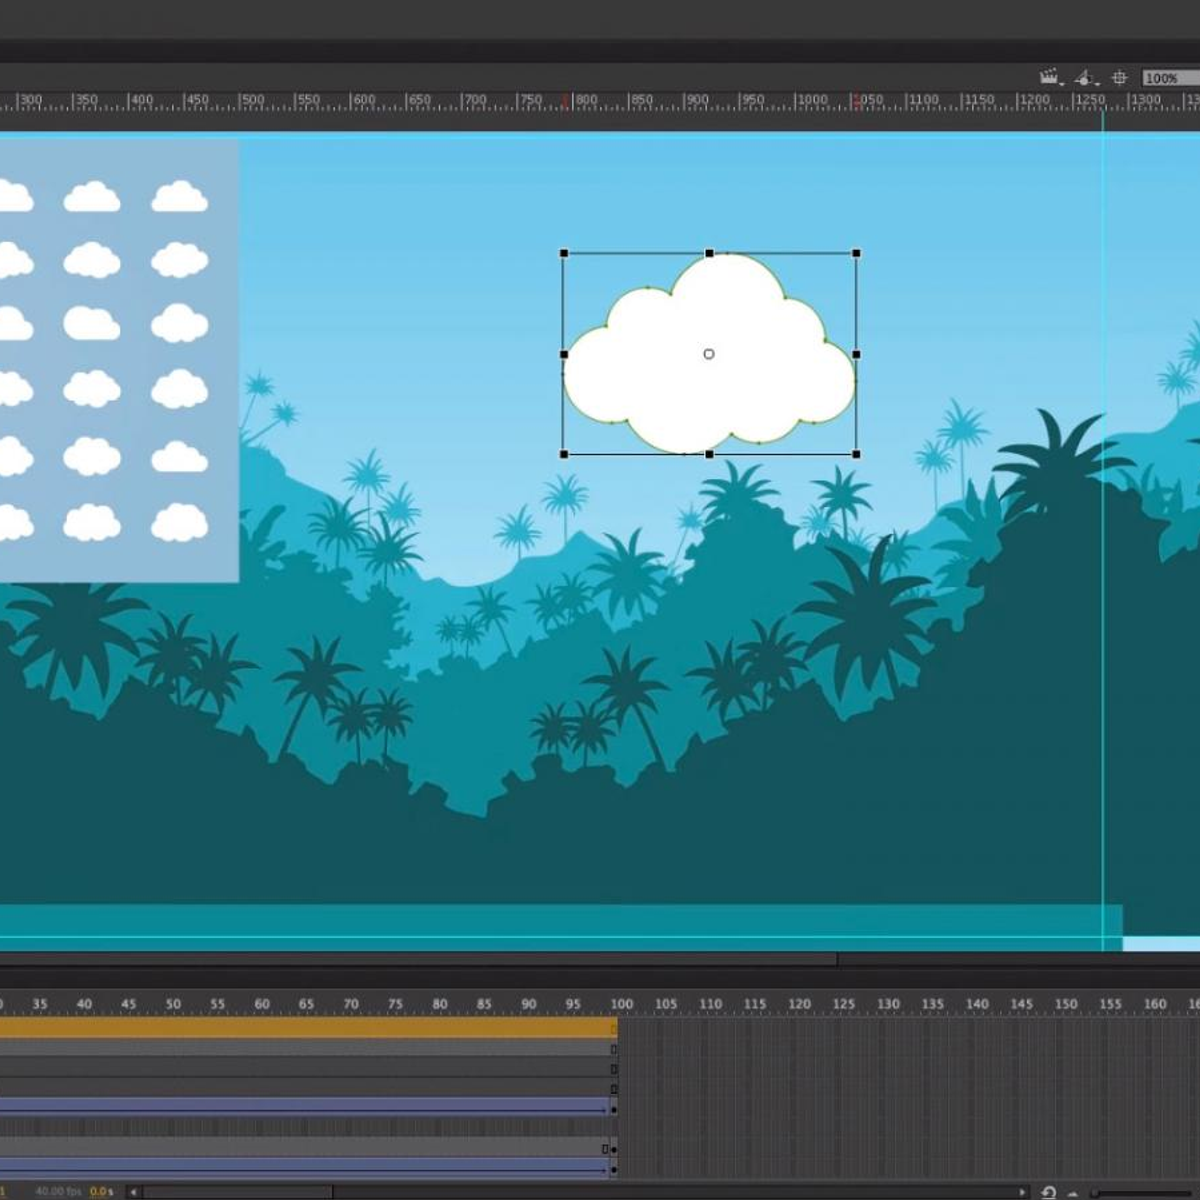 Adobe flash animator free download for windows 10